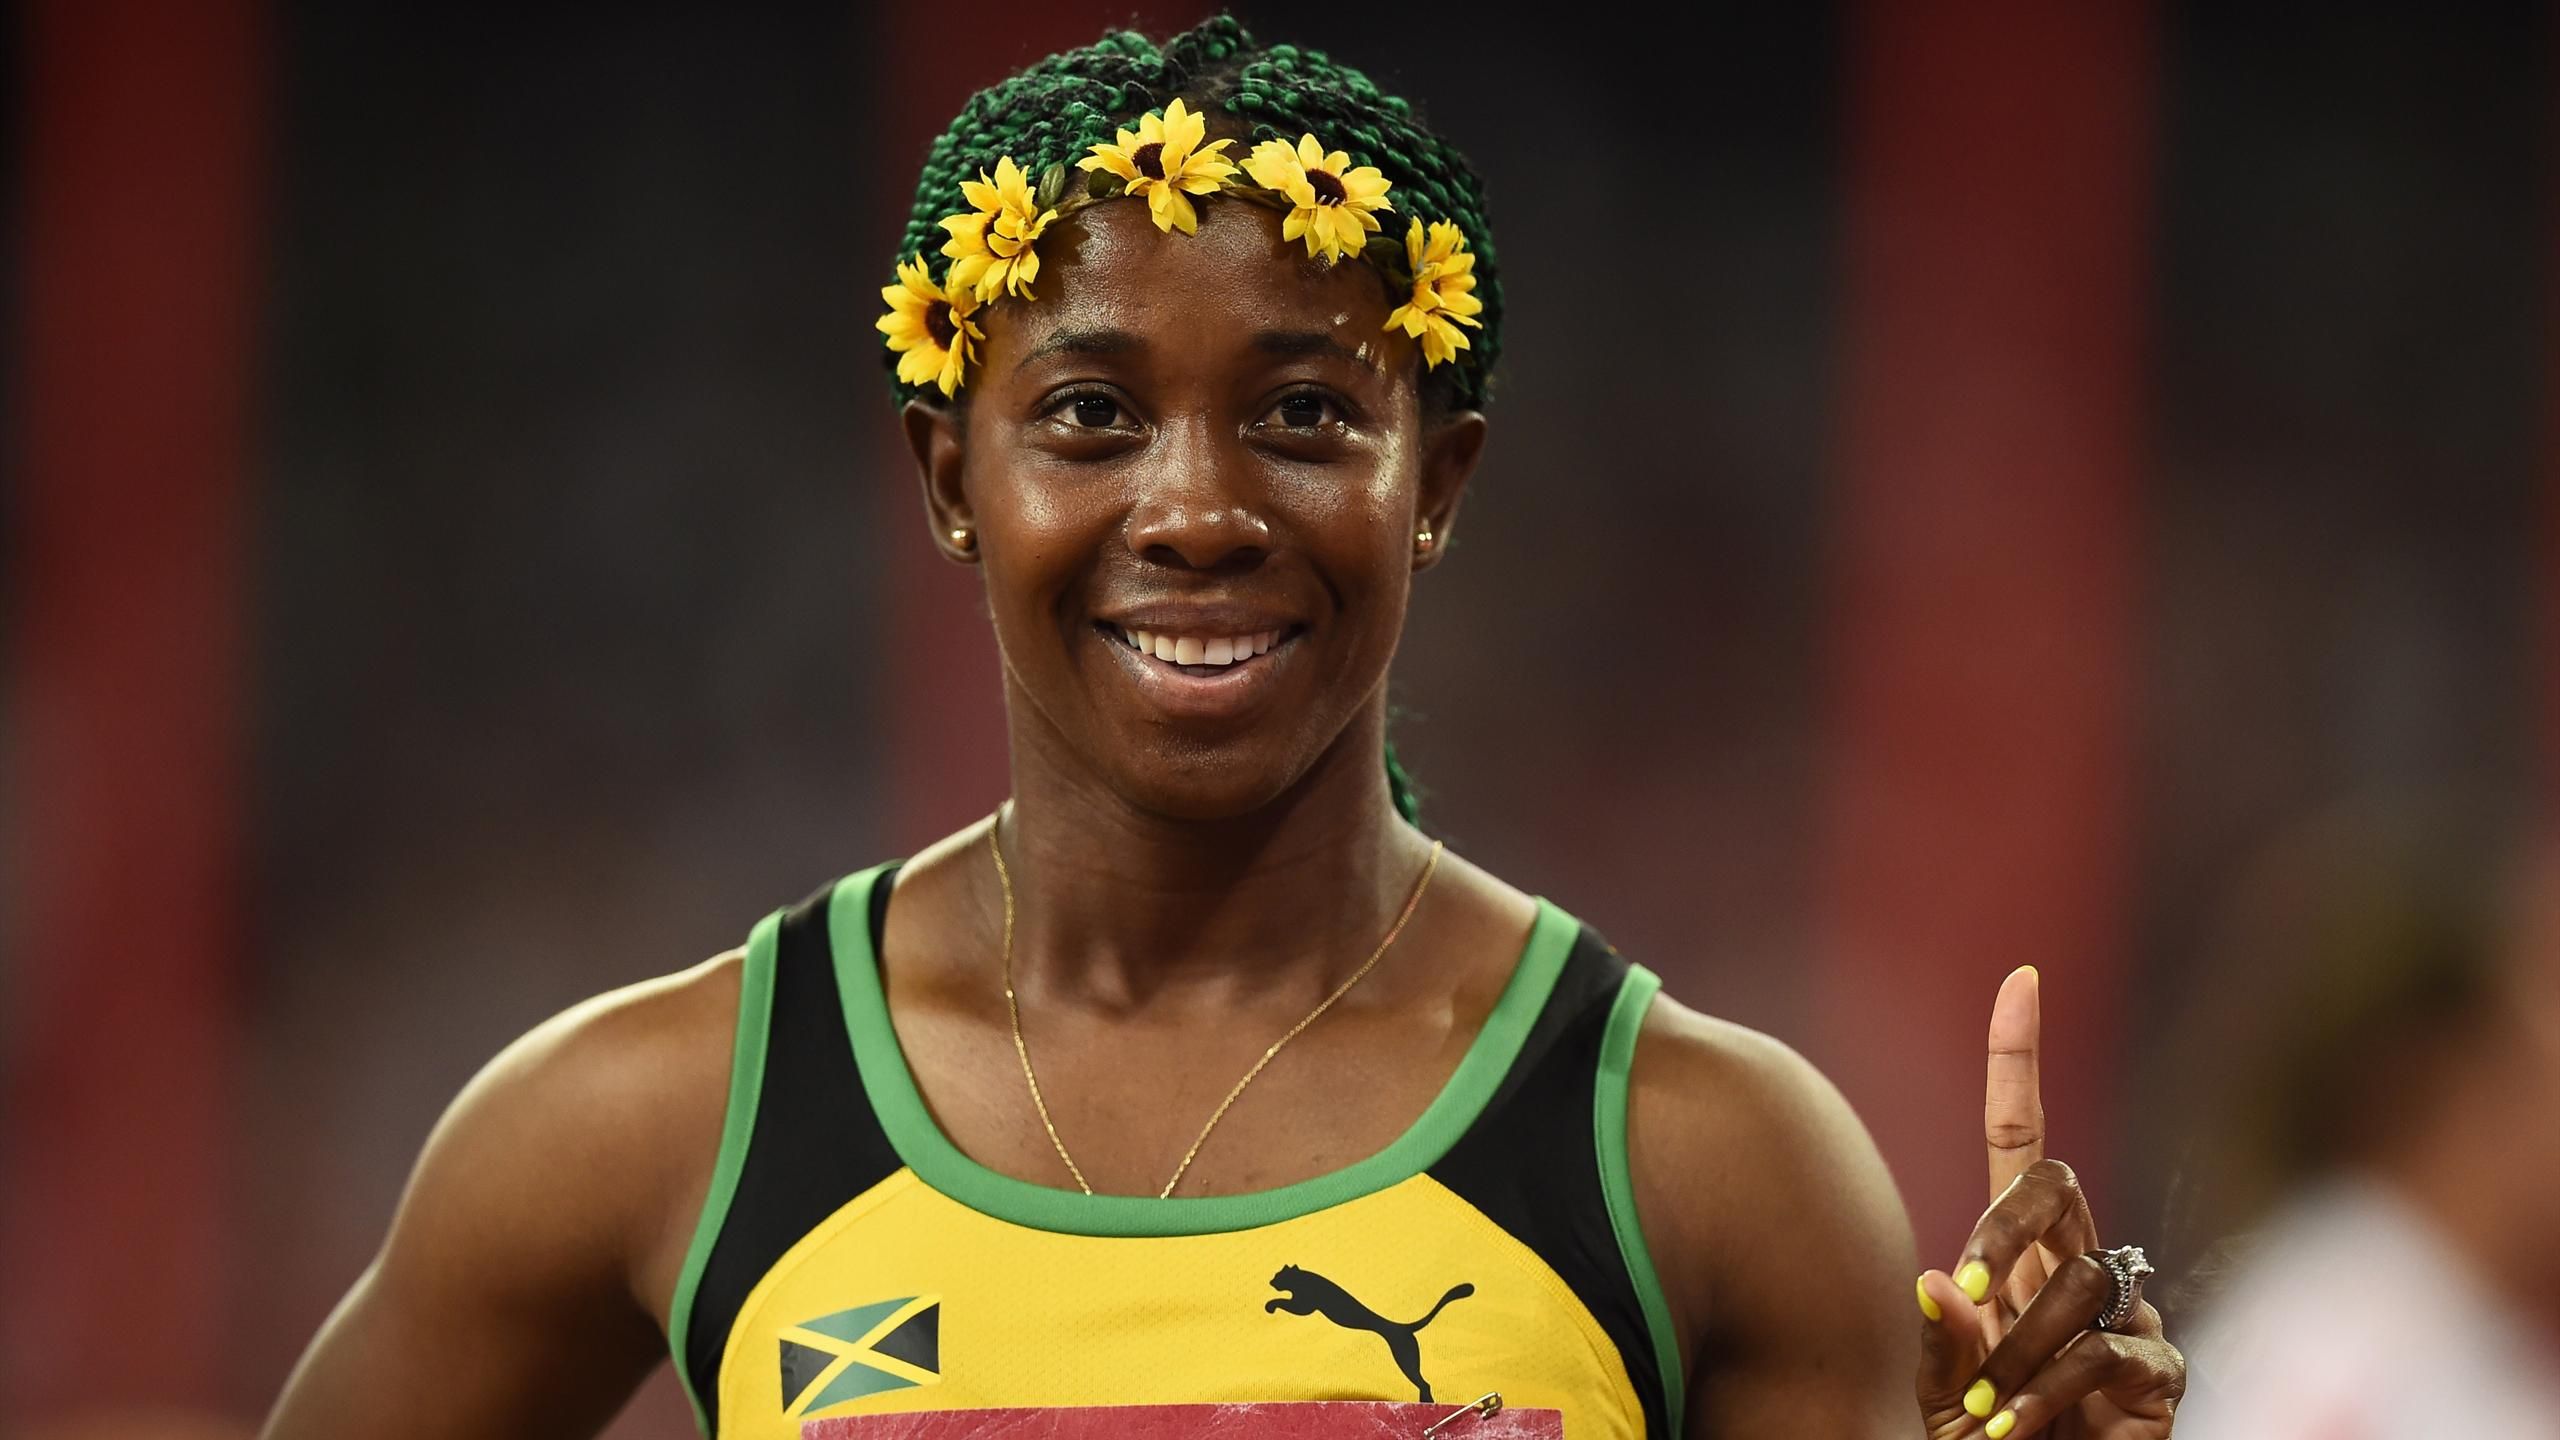 2015 world championships in athletics – women's 200 metres